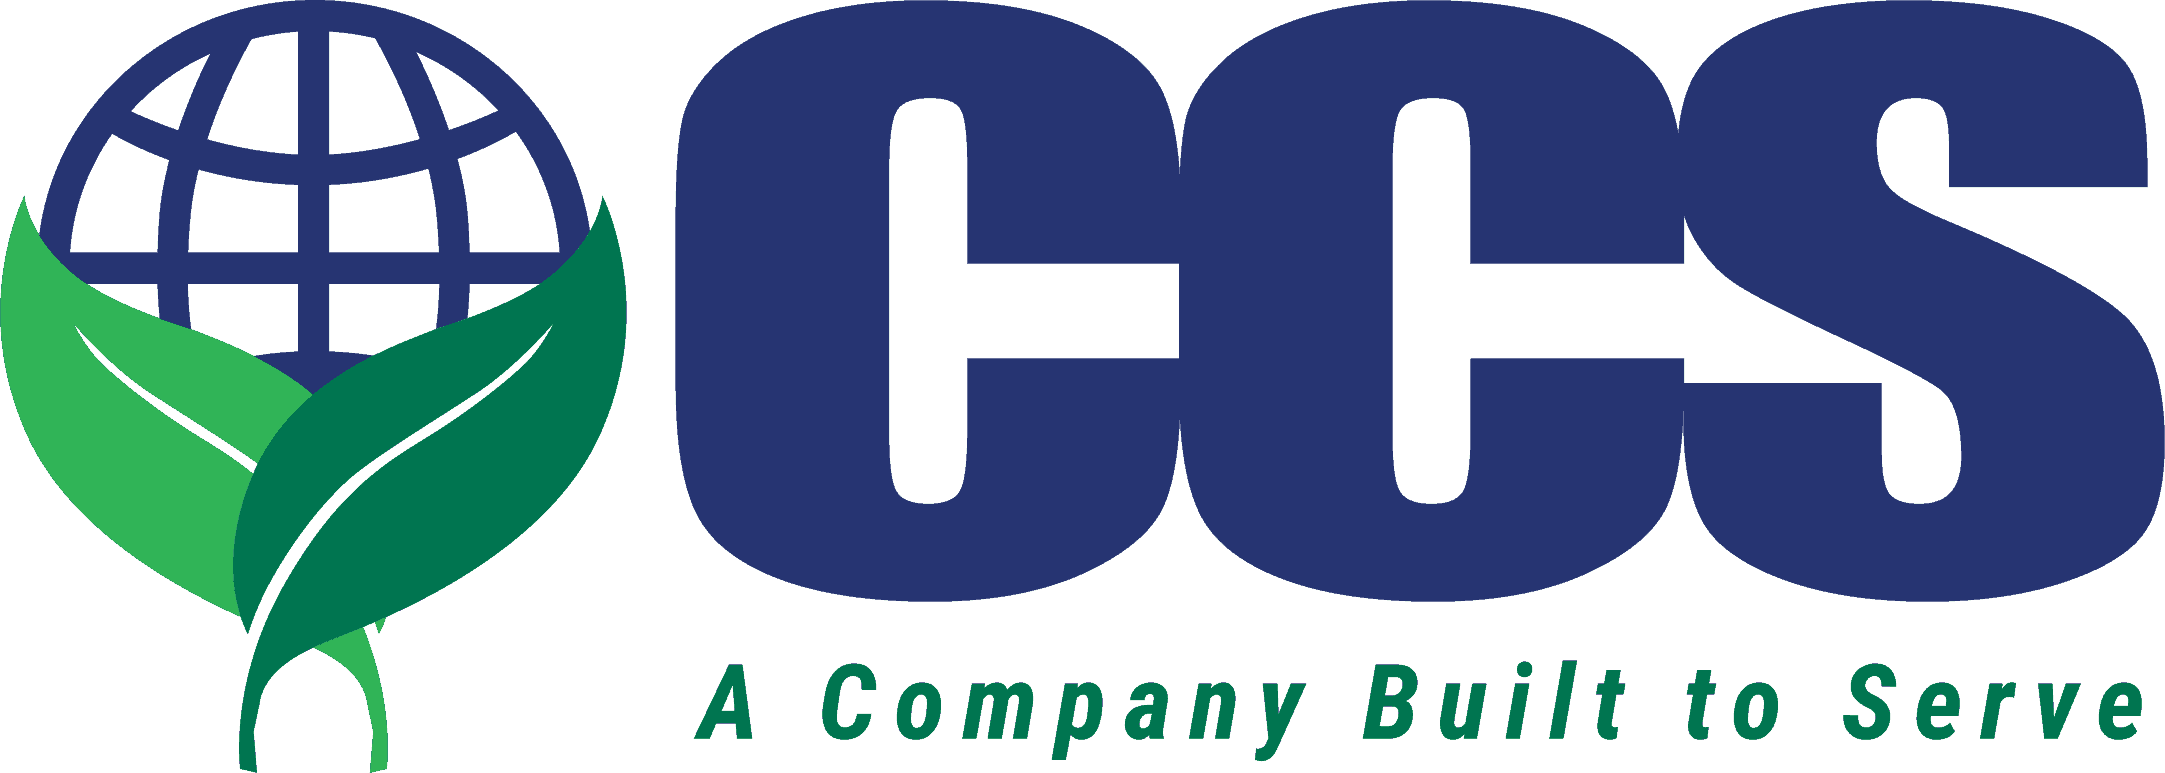 CCS Primary Logo with Tagline